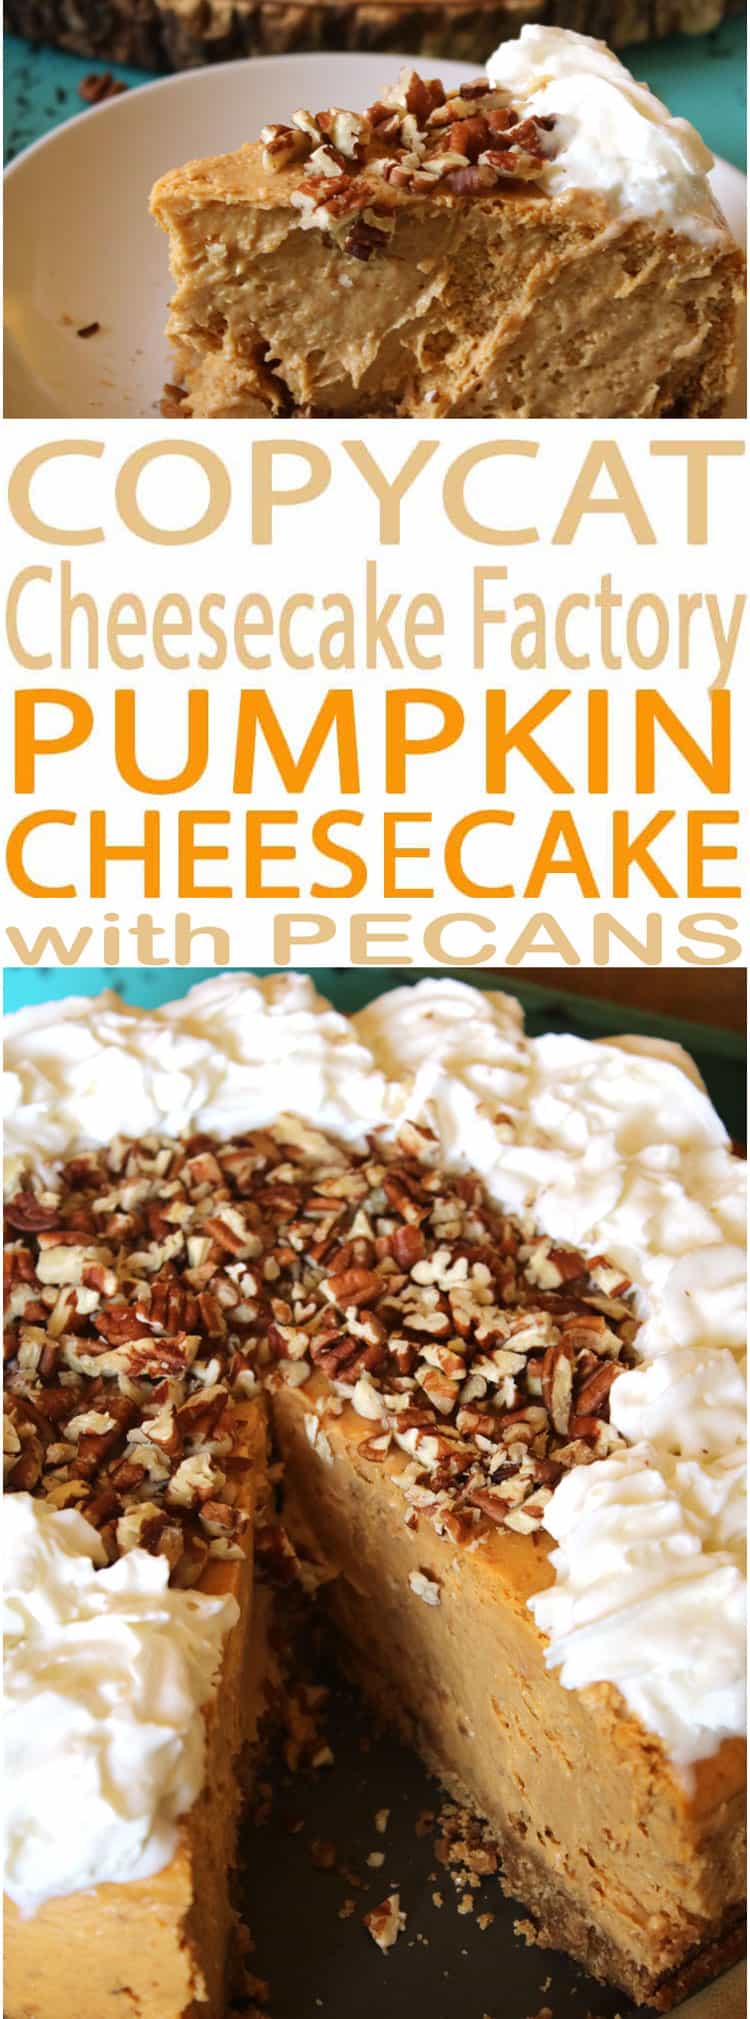 Pumpkin Cheesecake - A Cheesecake Factory Menu Favorite